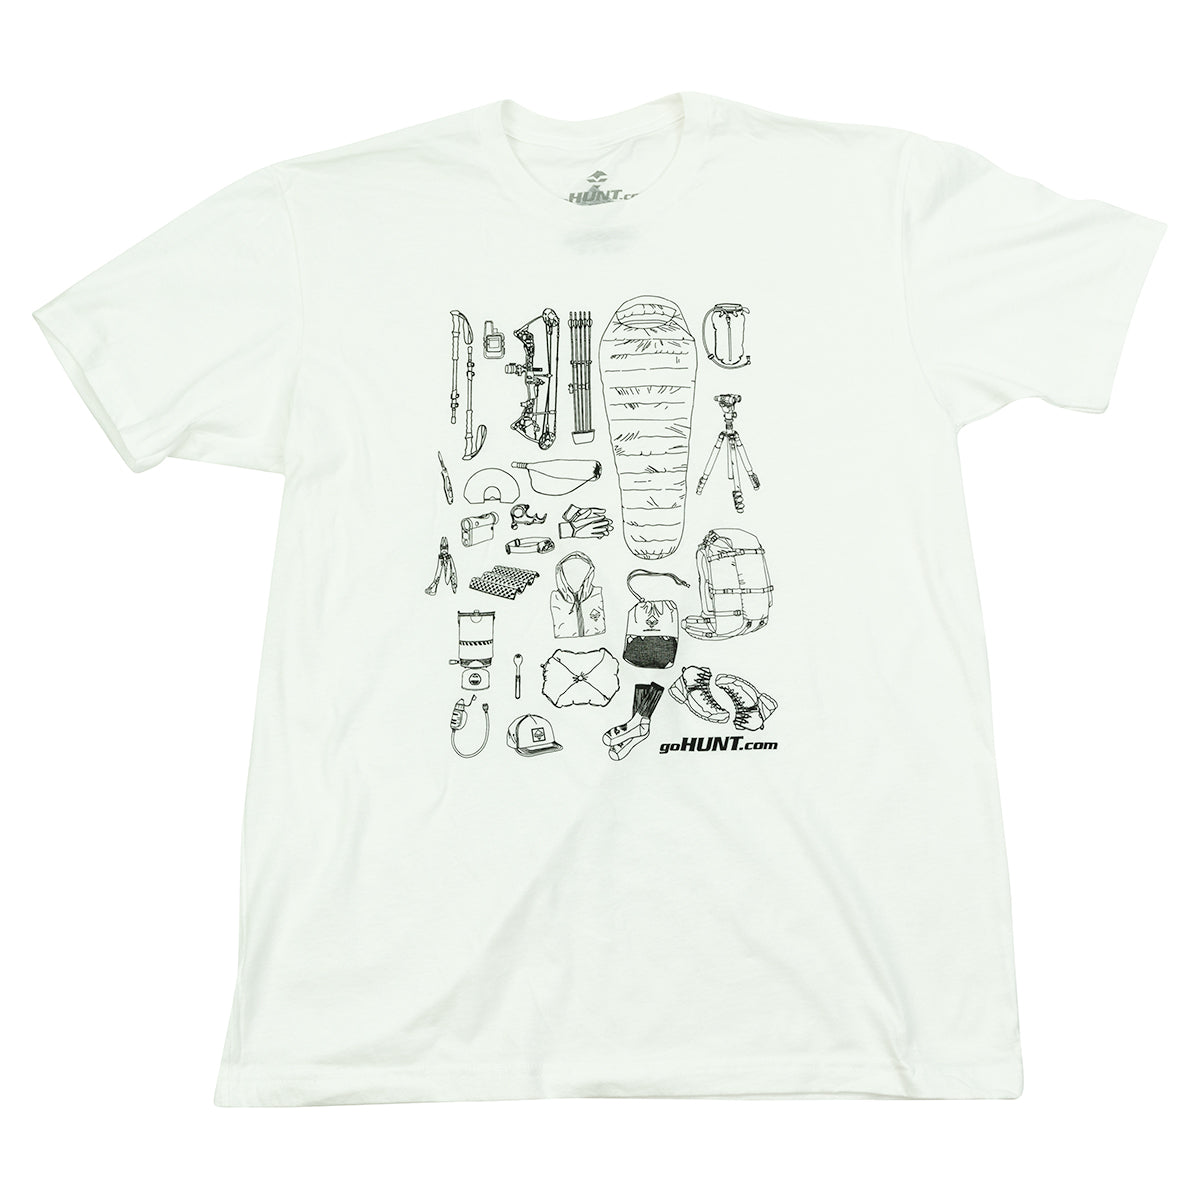 GOHUNT Early Season Gear T-Shirt in goHUNT Early Season Gear T-Shirt by goHUNT | Apparel - goHUNT Shop by GOHUNT | GOHUNT - GOHUNT Shop